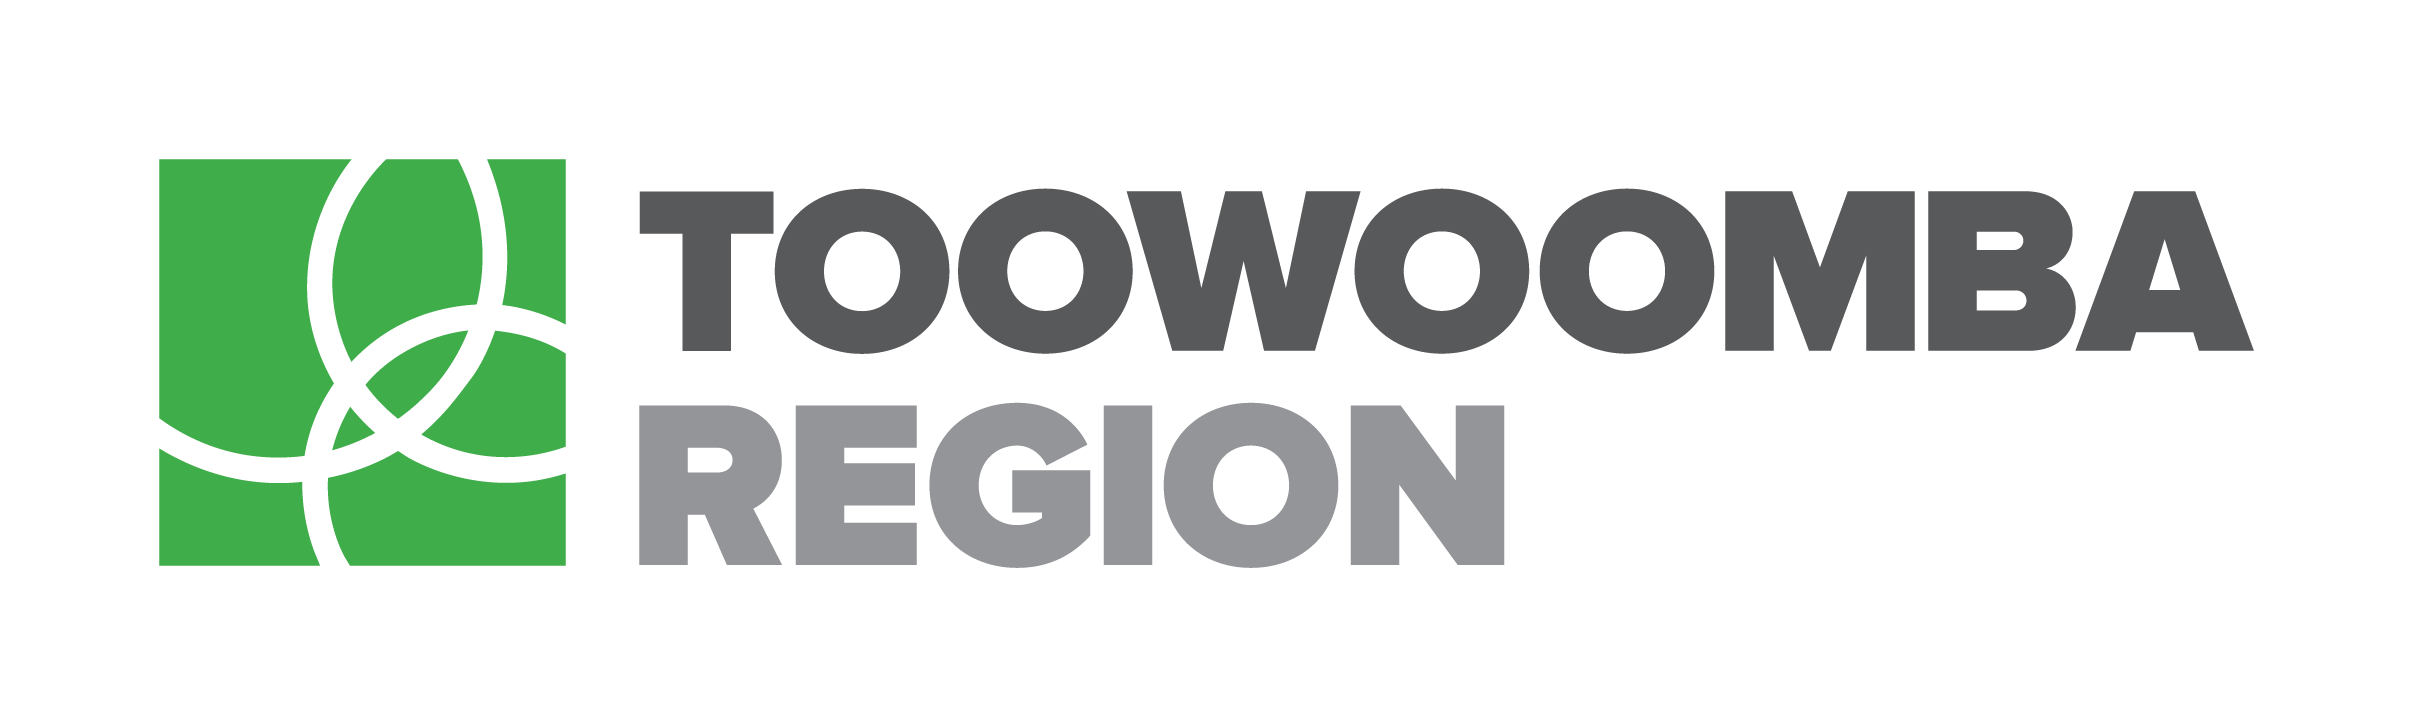 Toowoomba Regional logo